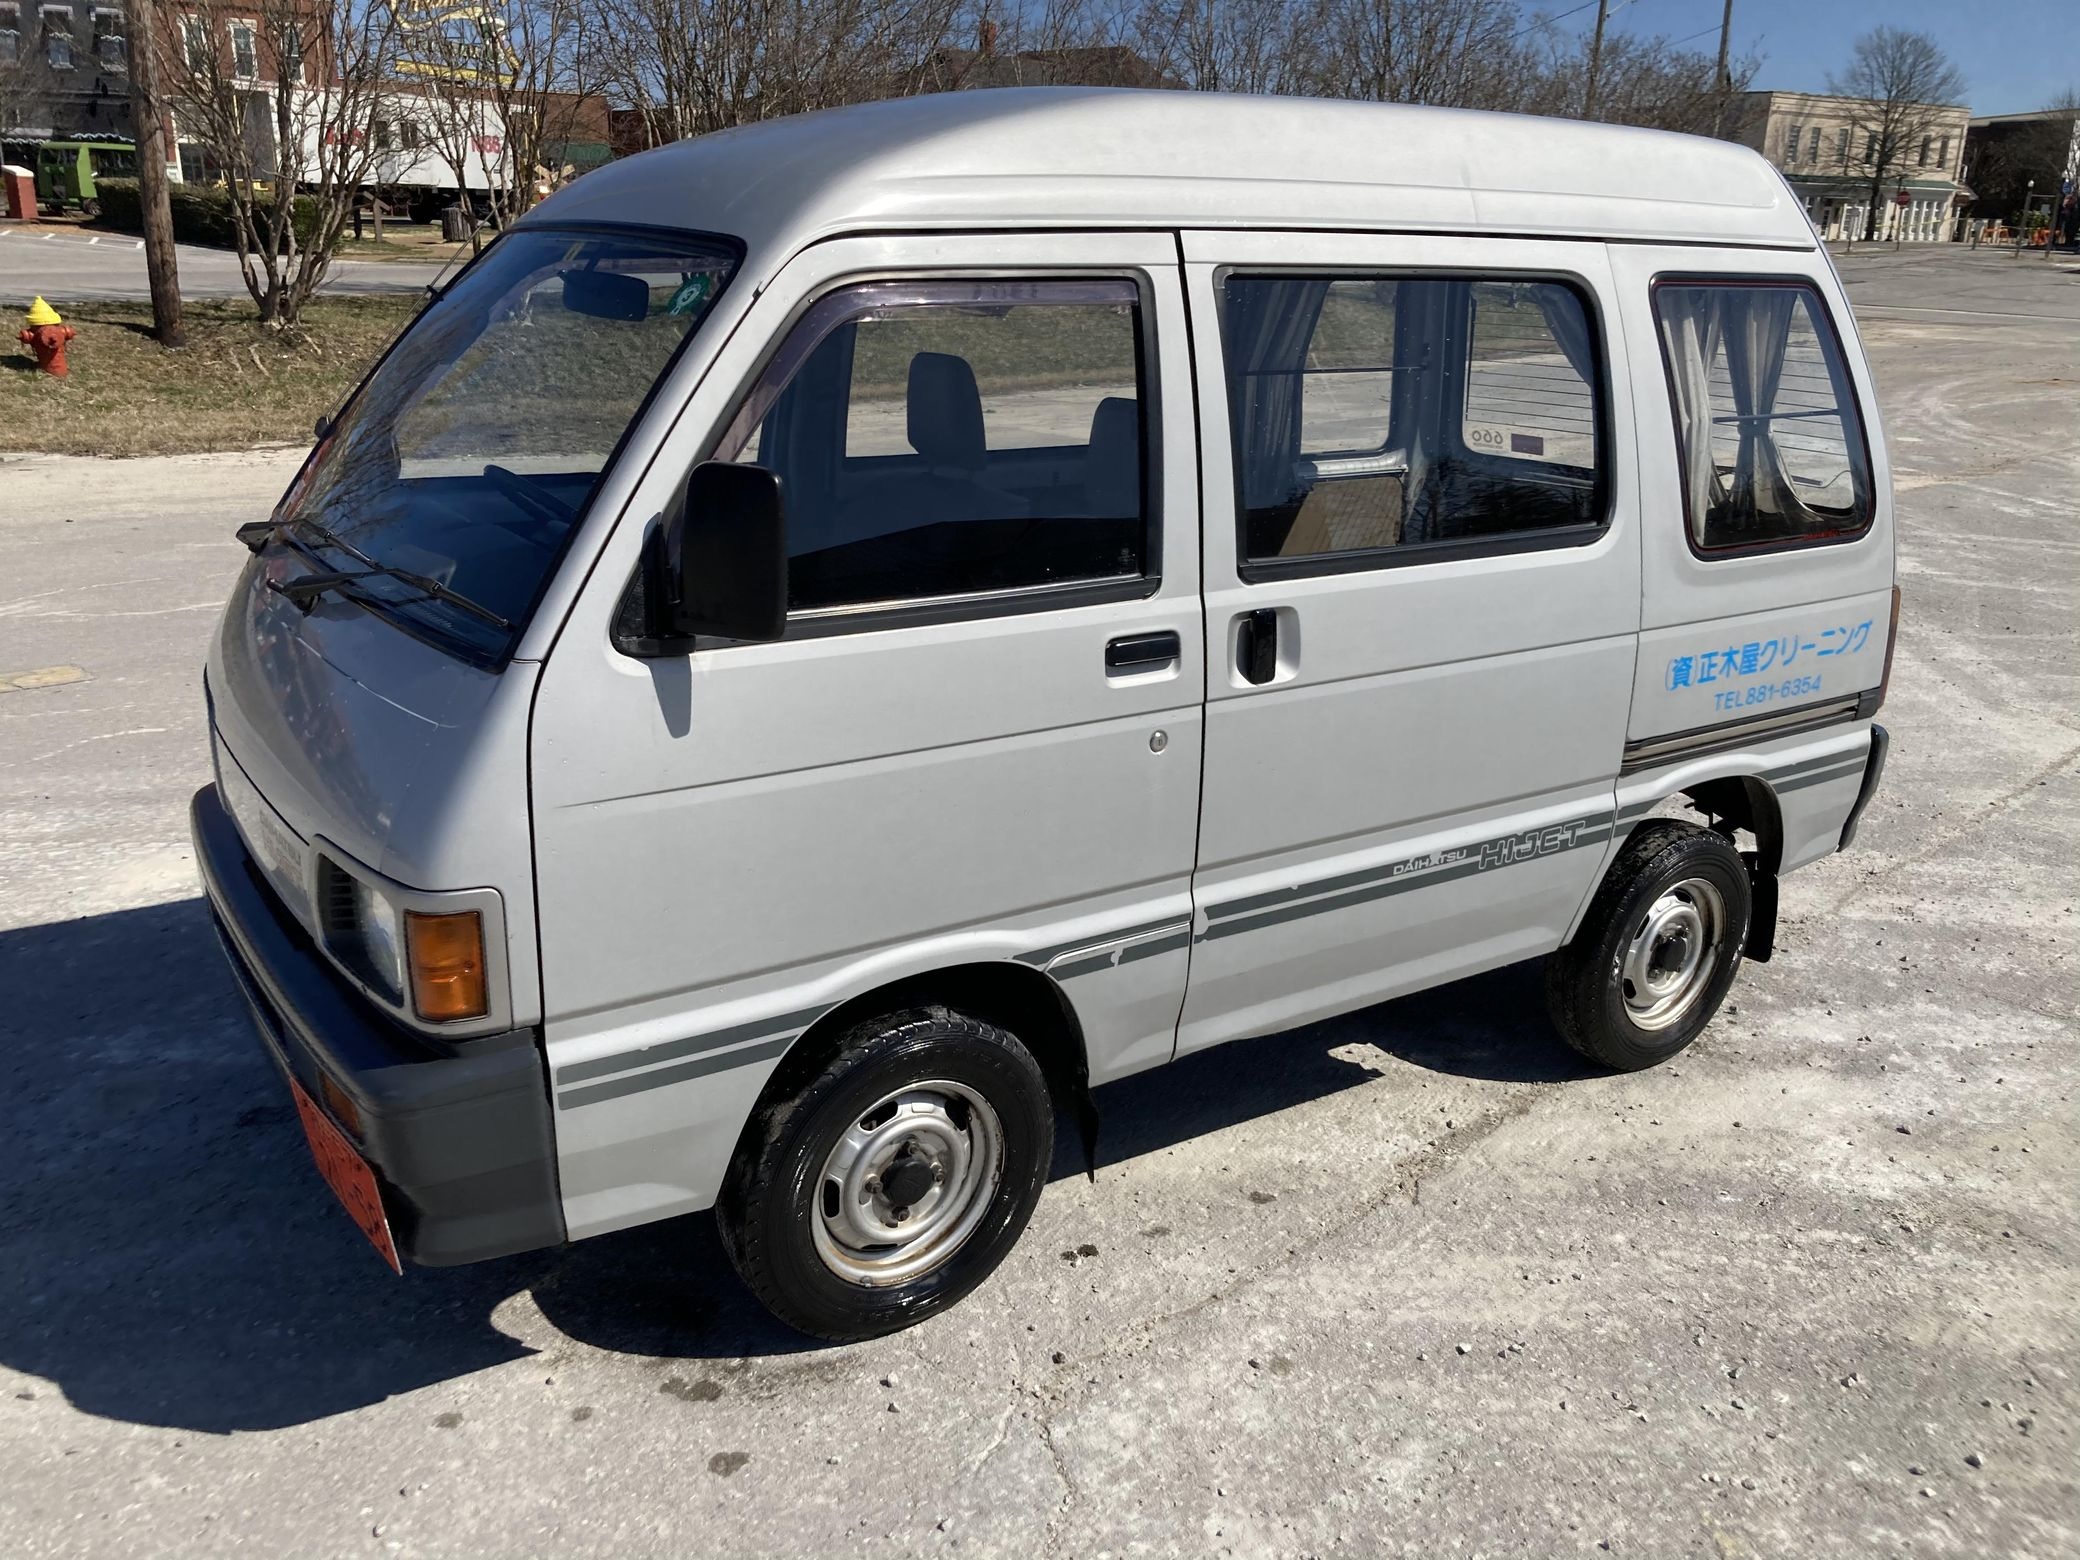 A silver 1992 Daihatsu Hijet kei car van in a parking lot